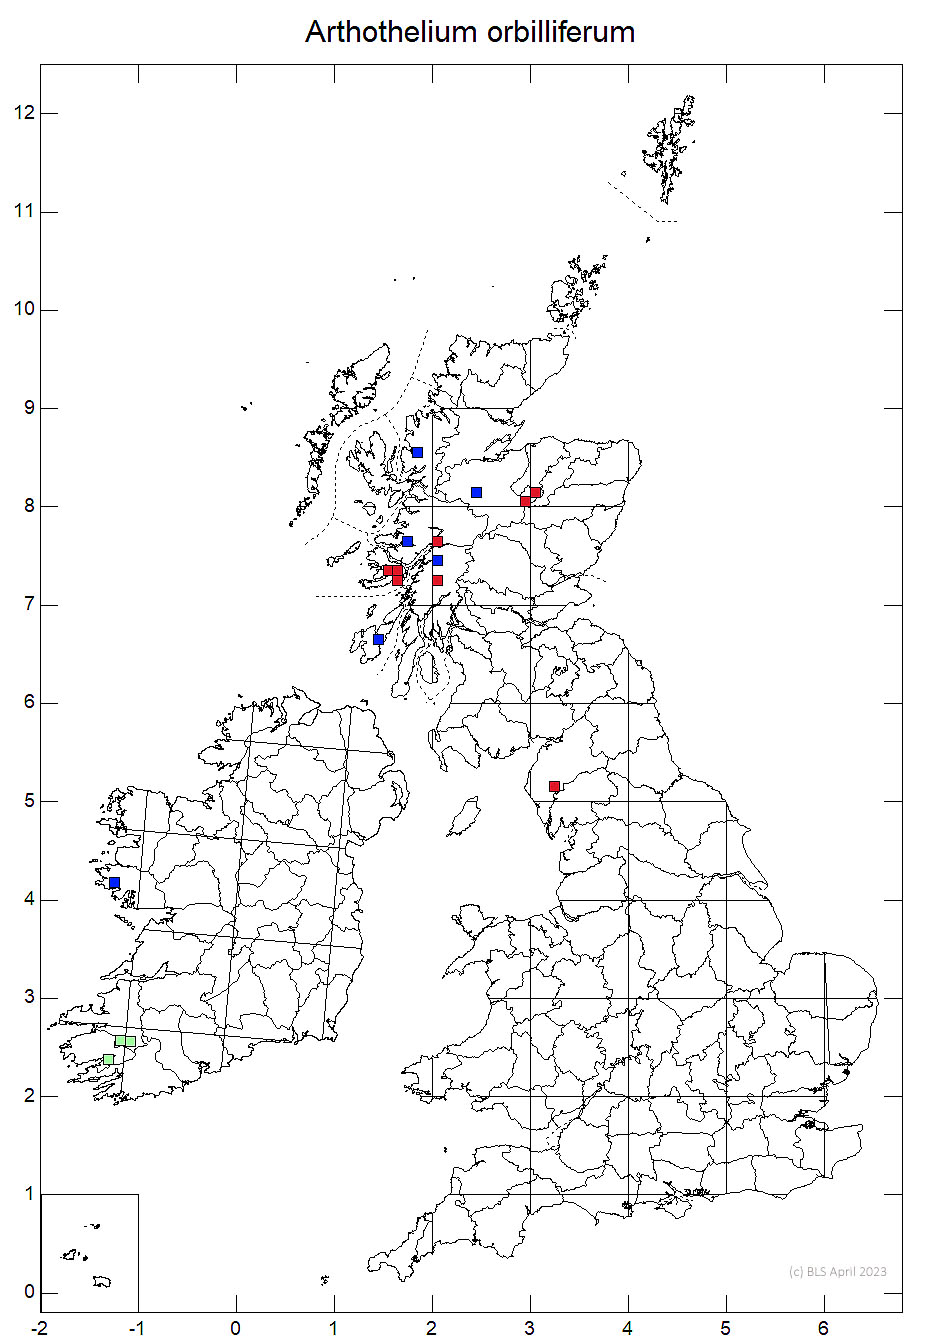 Arthothelium orbilliferum 10km sq distribution map